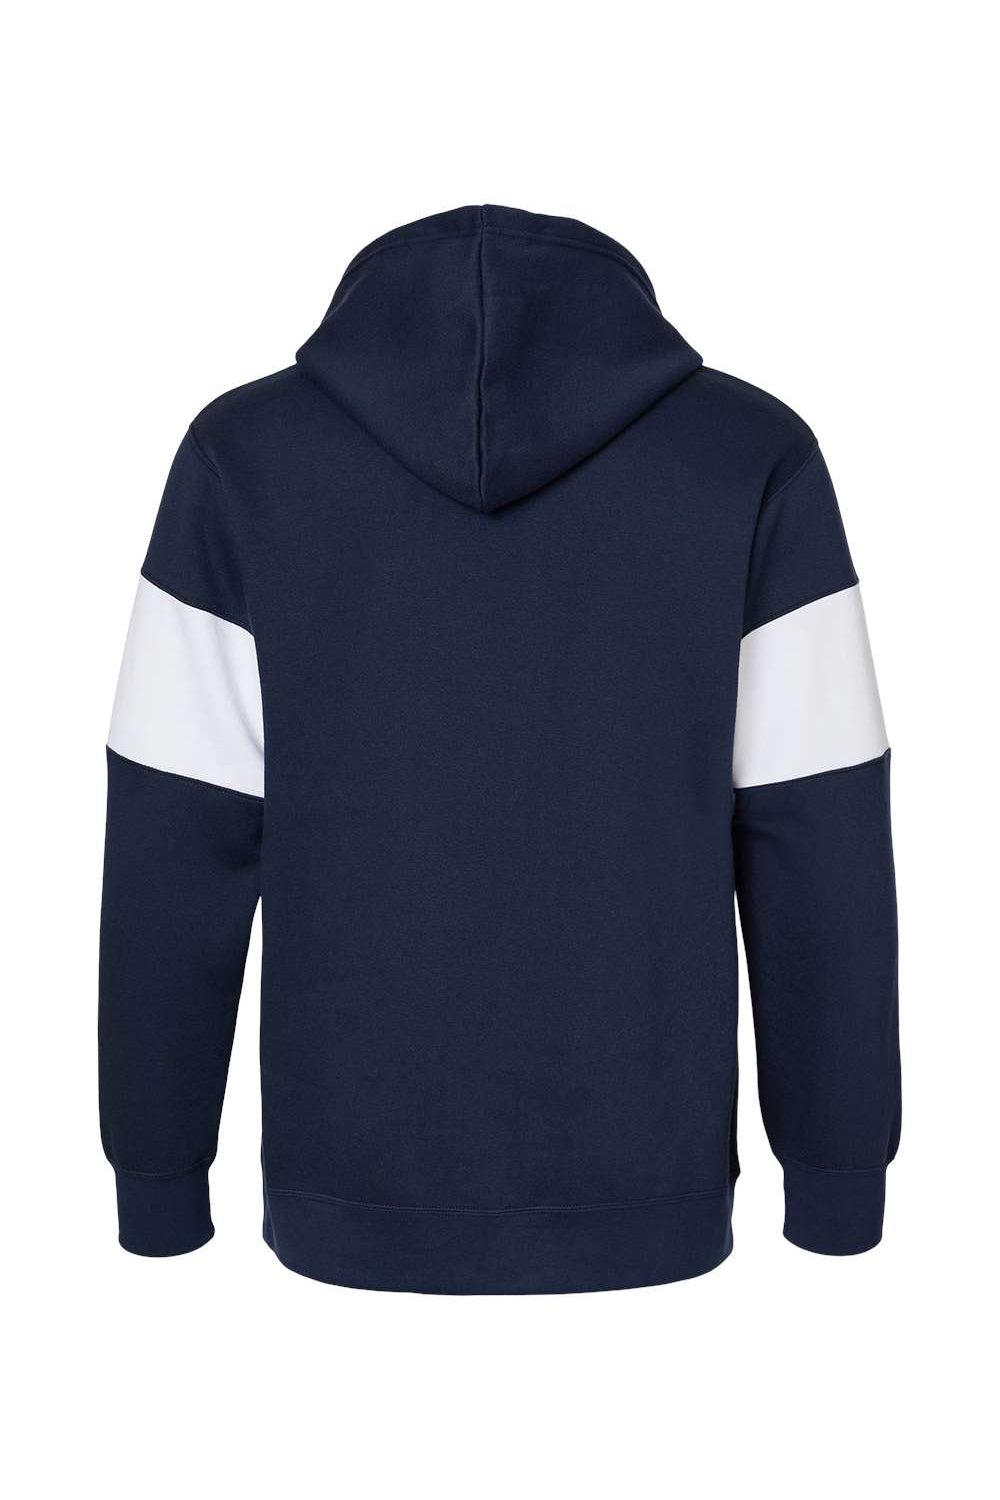 MV Sport 22709 Mens Classic Fleece Colorblocked Hooded Sweatshirt Hoodie Navy Blue Flat Back